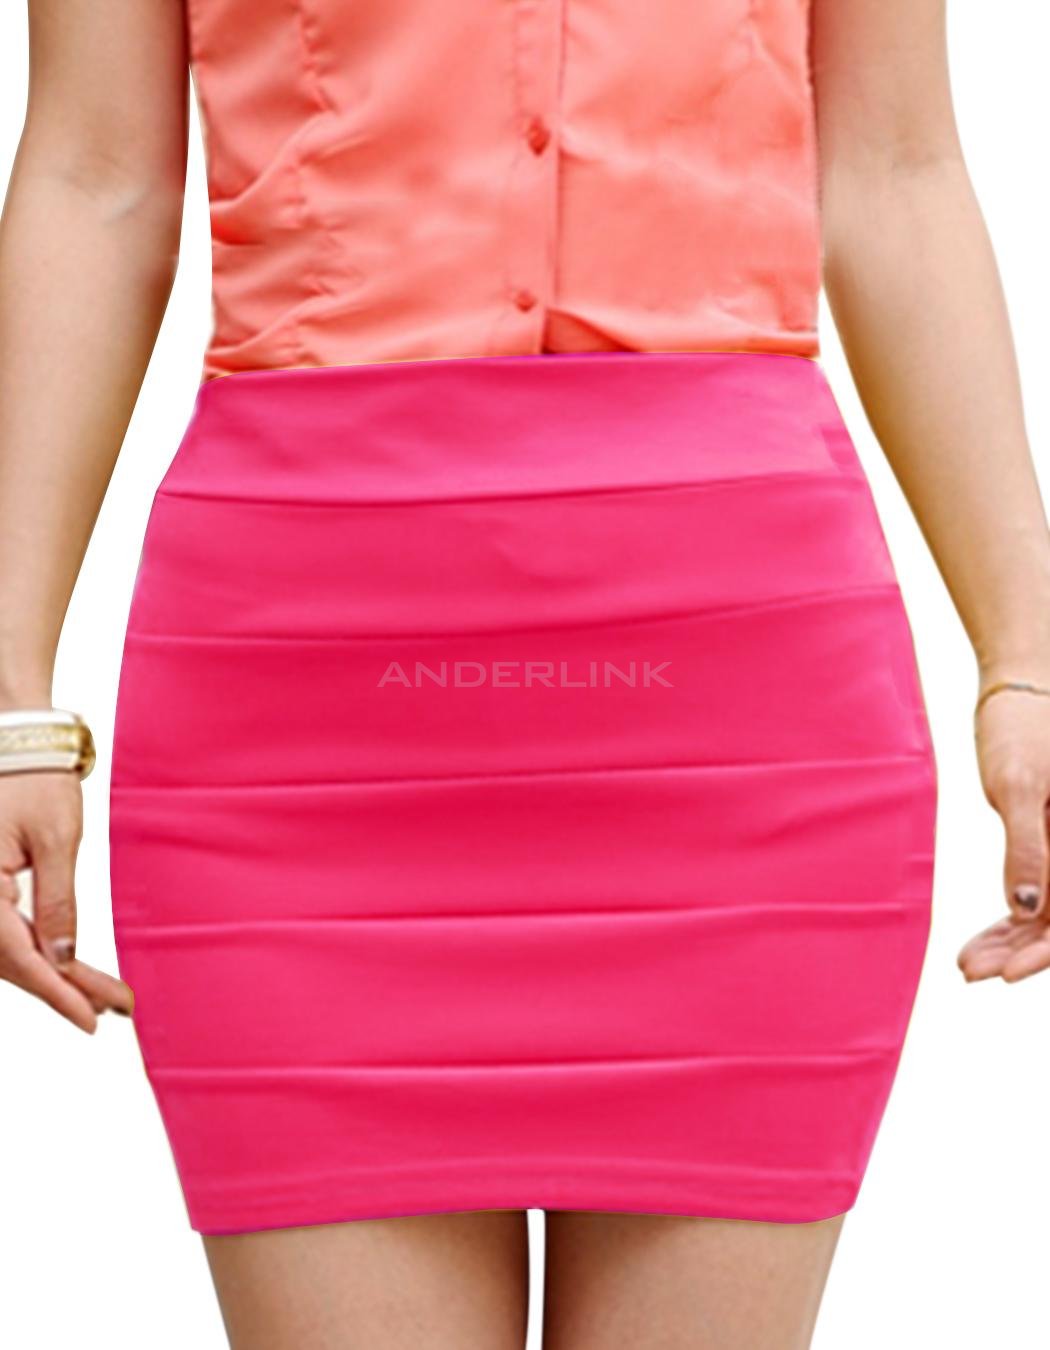 unknown Women's Vogue Cute Candy Colors Knit Skirt Mini Skirt Seven Color S ~M